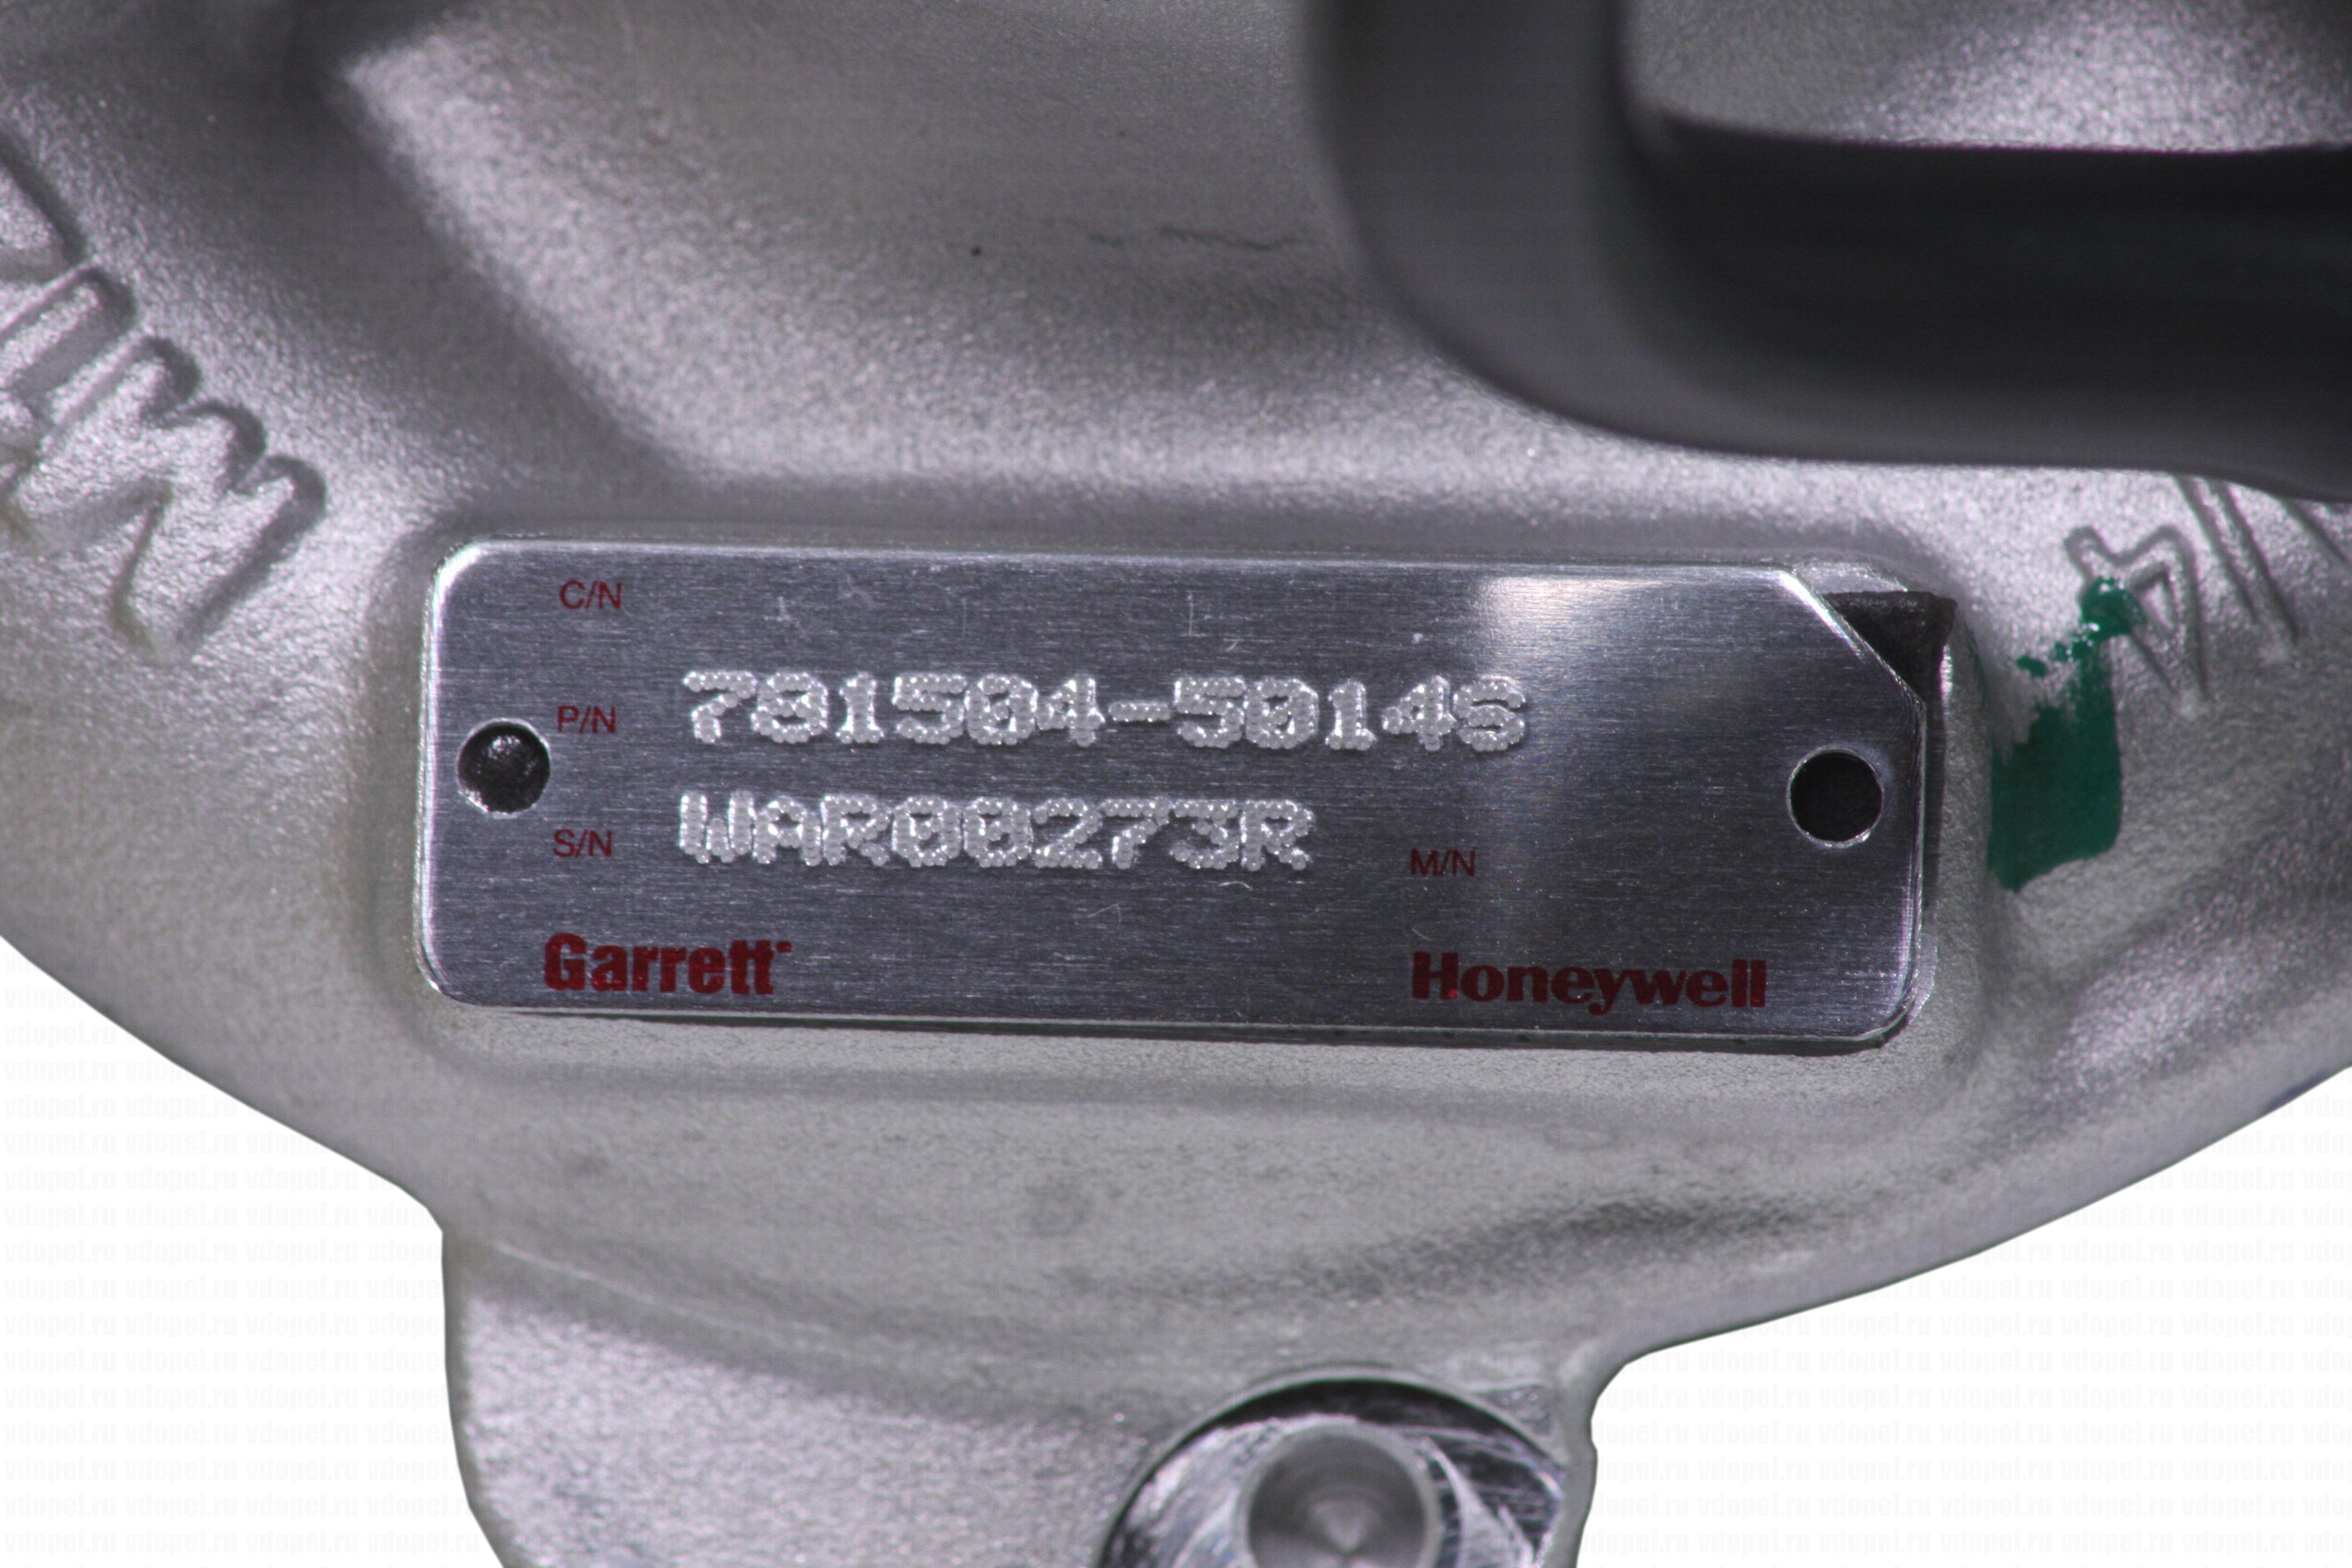 GARRETT 7815045014S  - Турбина 14NEL, NET Opel Chevrolet 